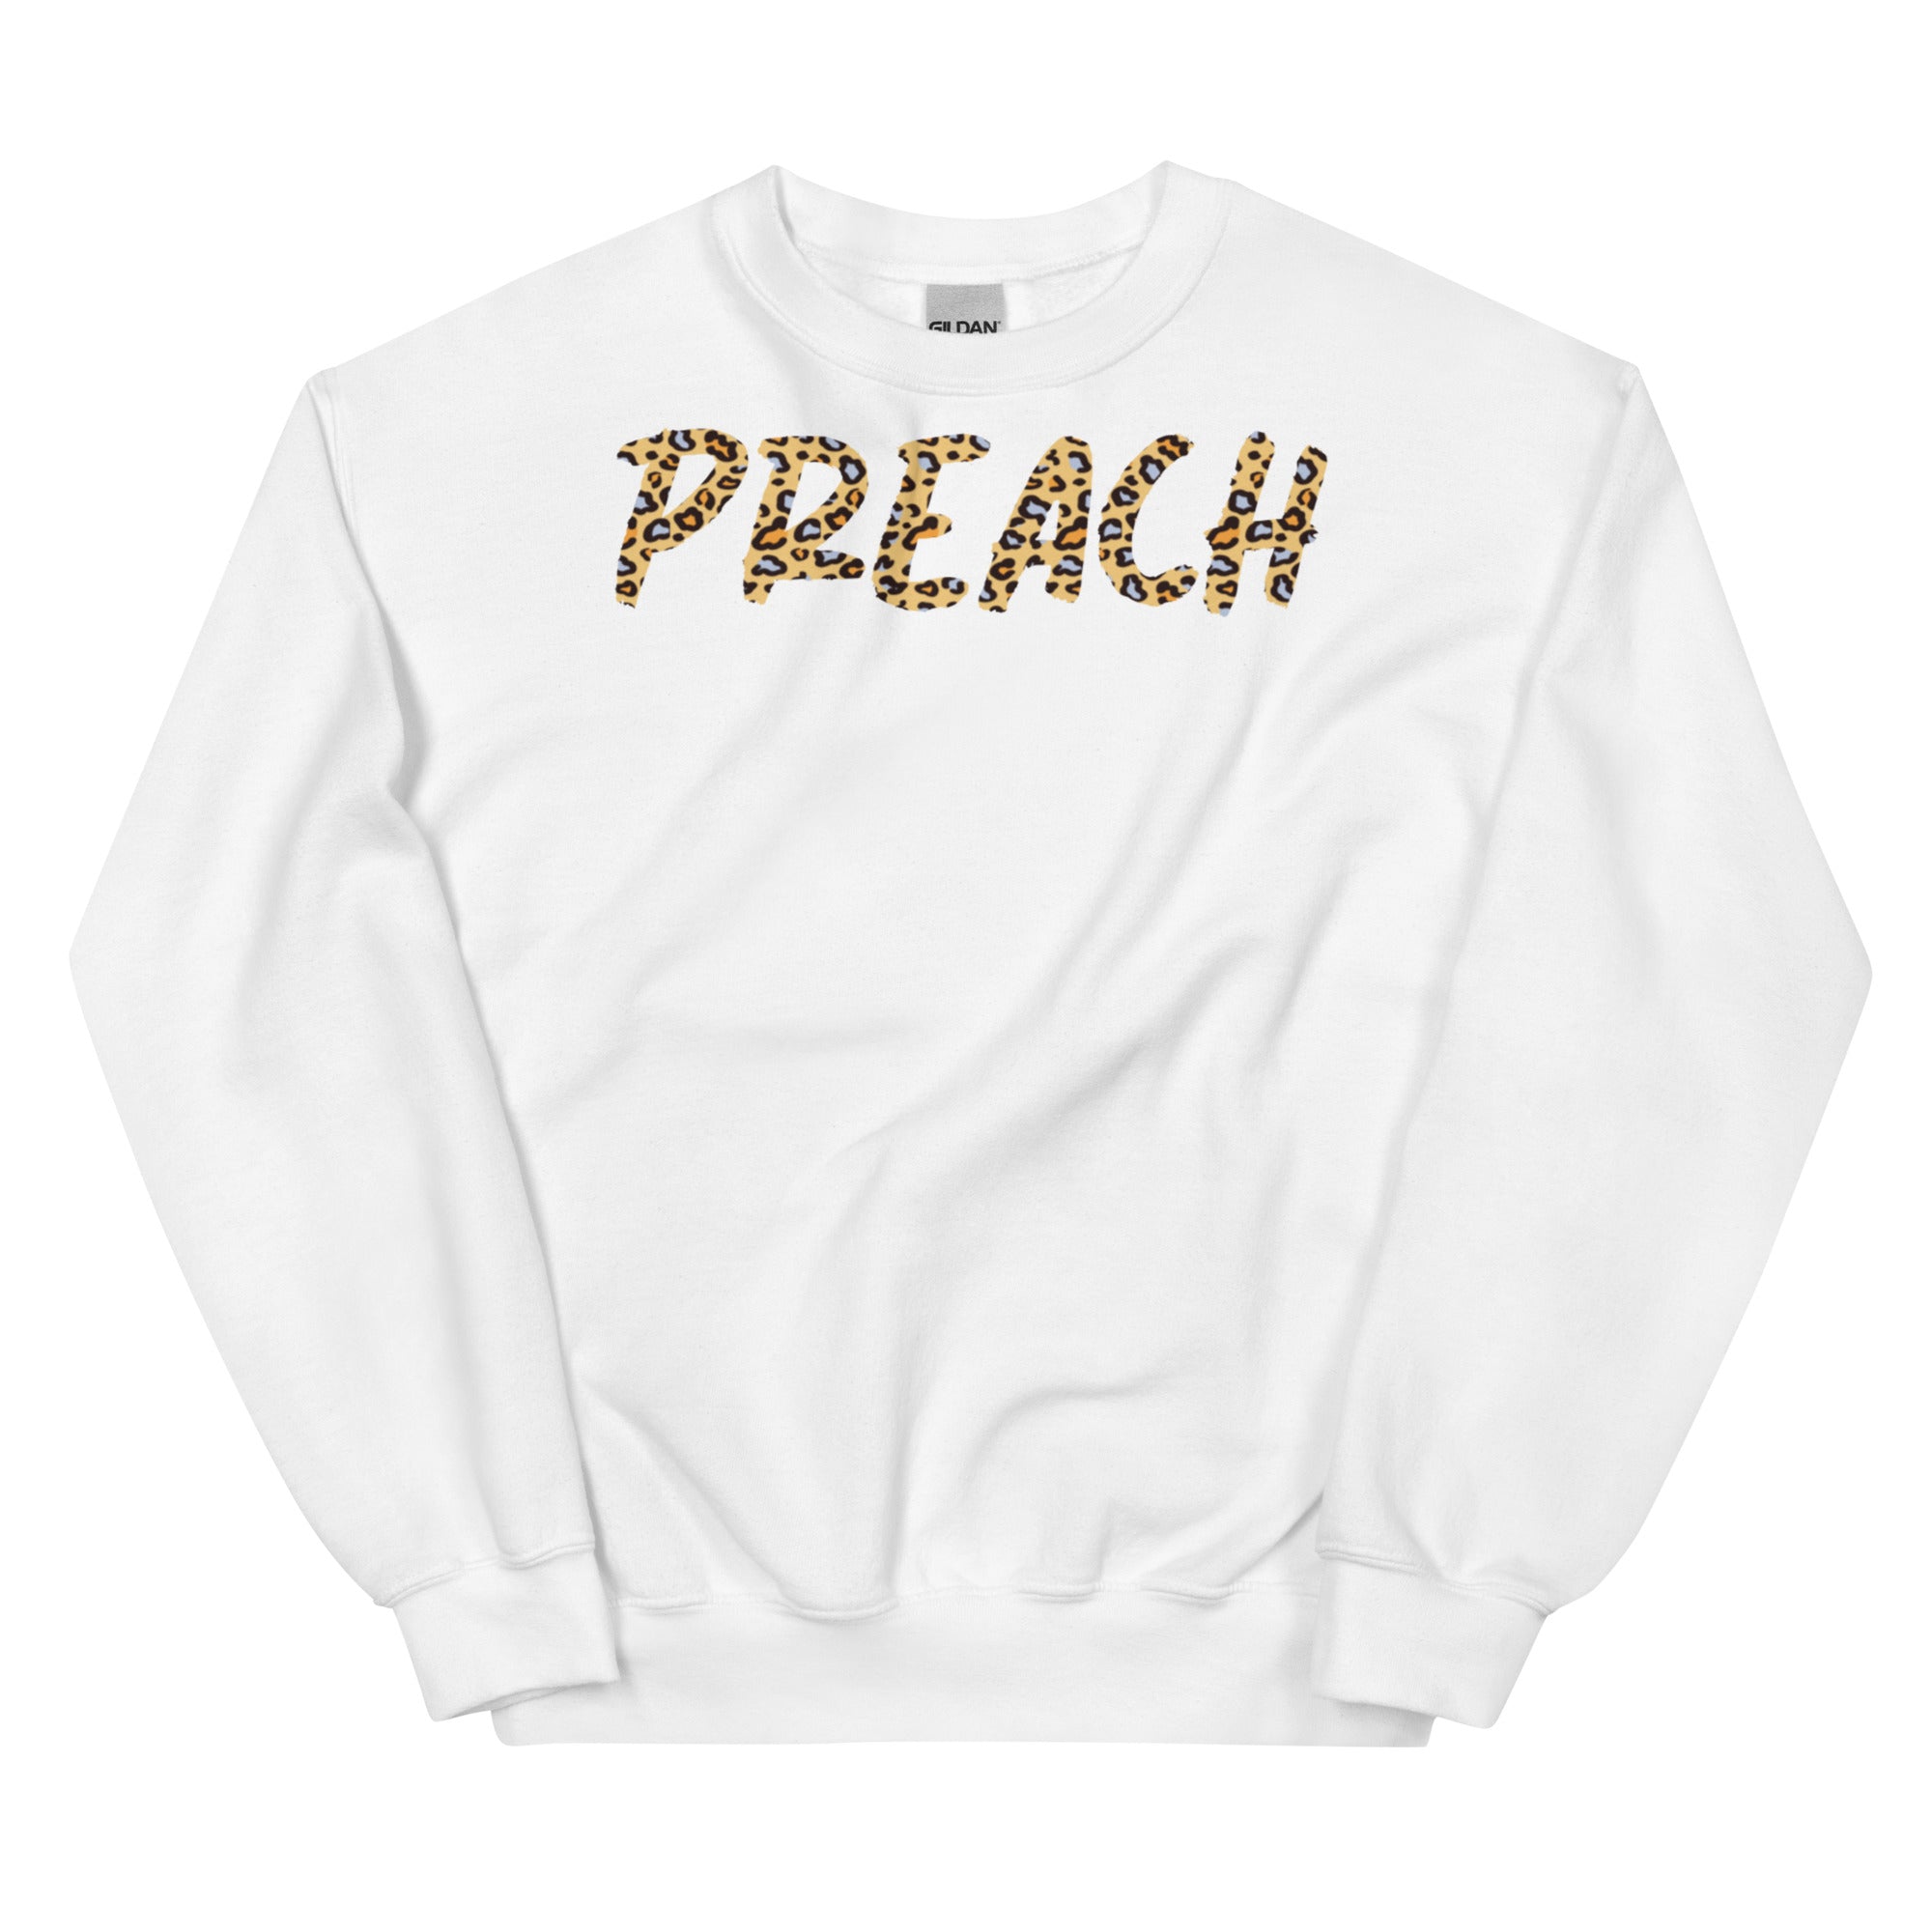 Preach We Must Be Born Again Unisex Premium Sweatshirt